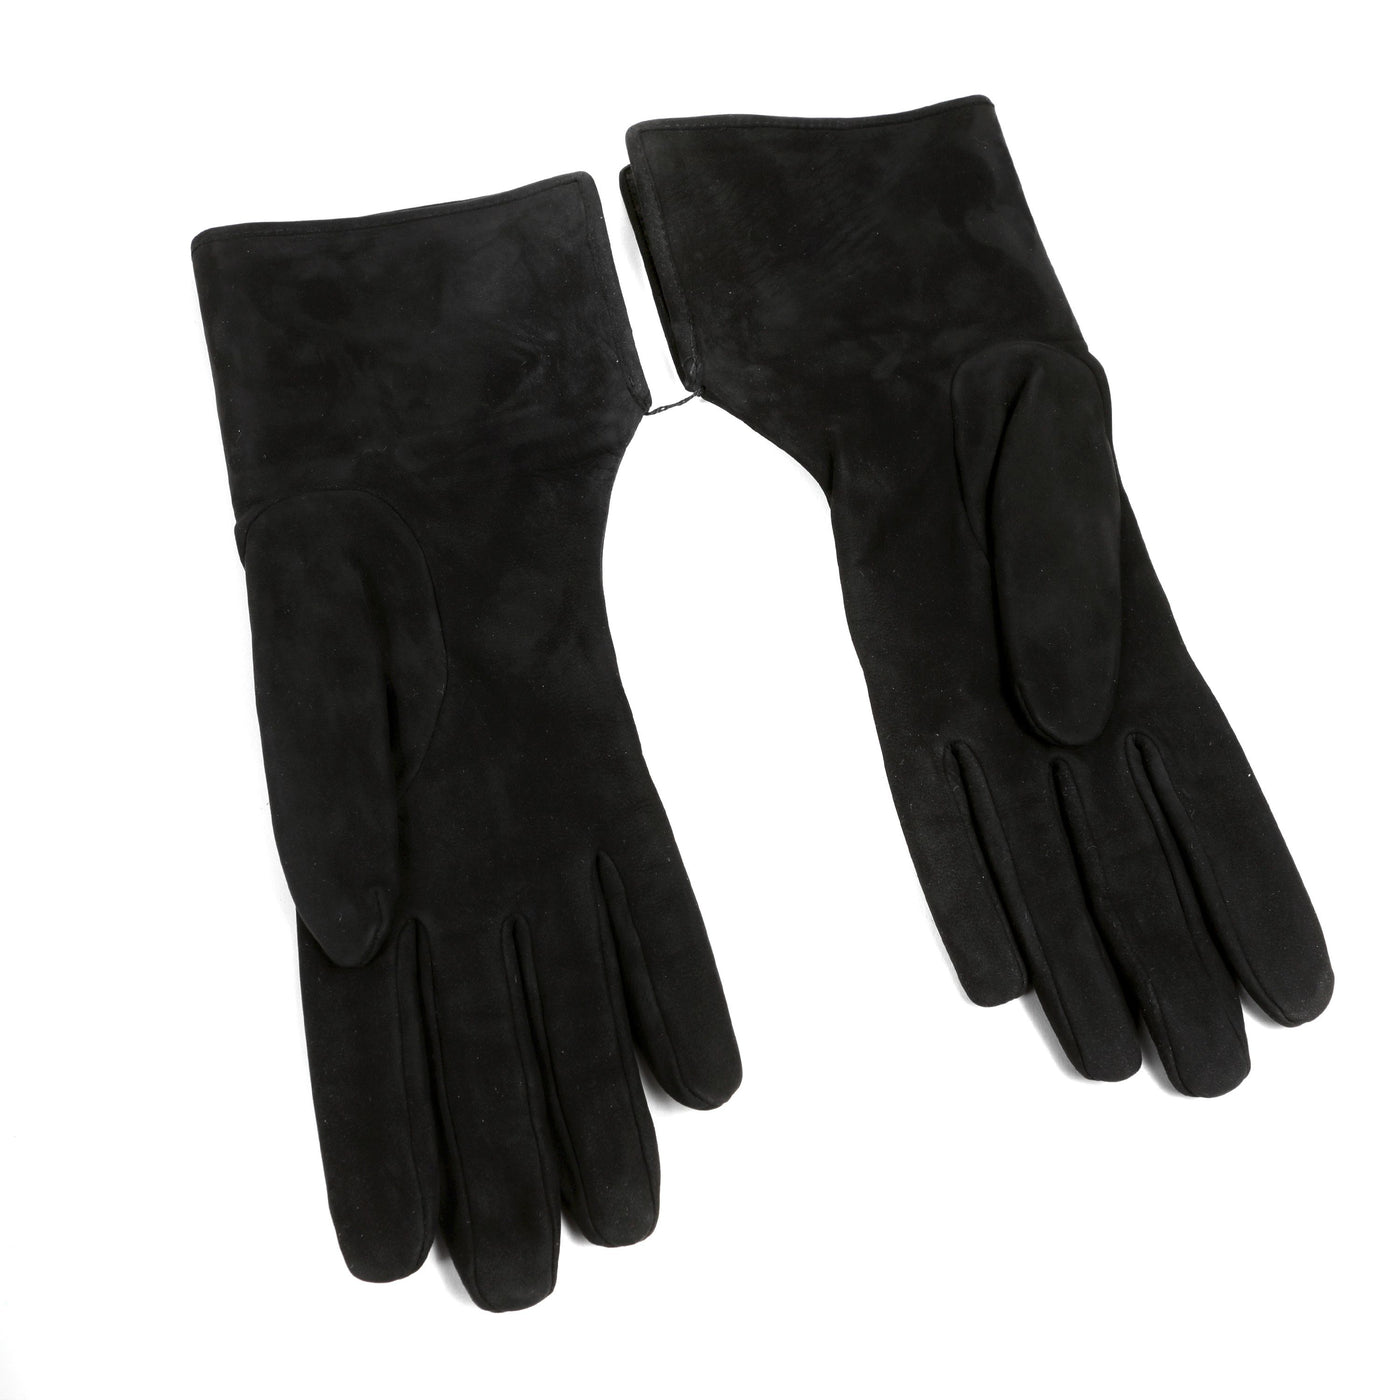 Chanel Black Suede Gloves